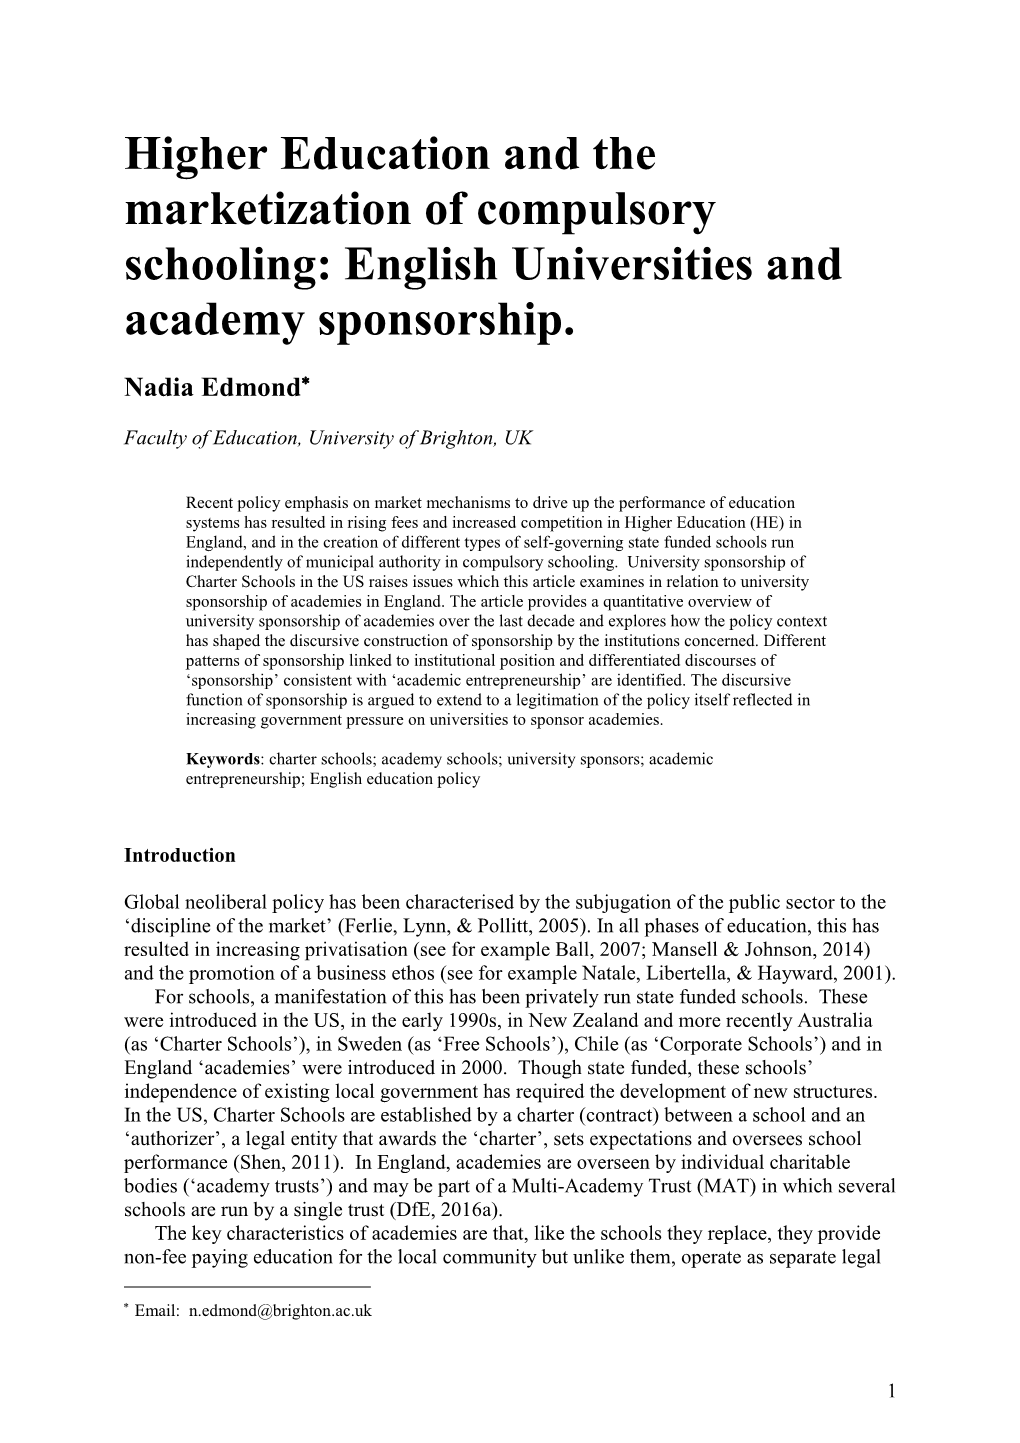 English Universities and Academy Sponsorship